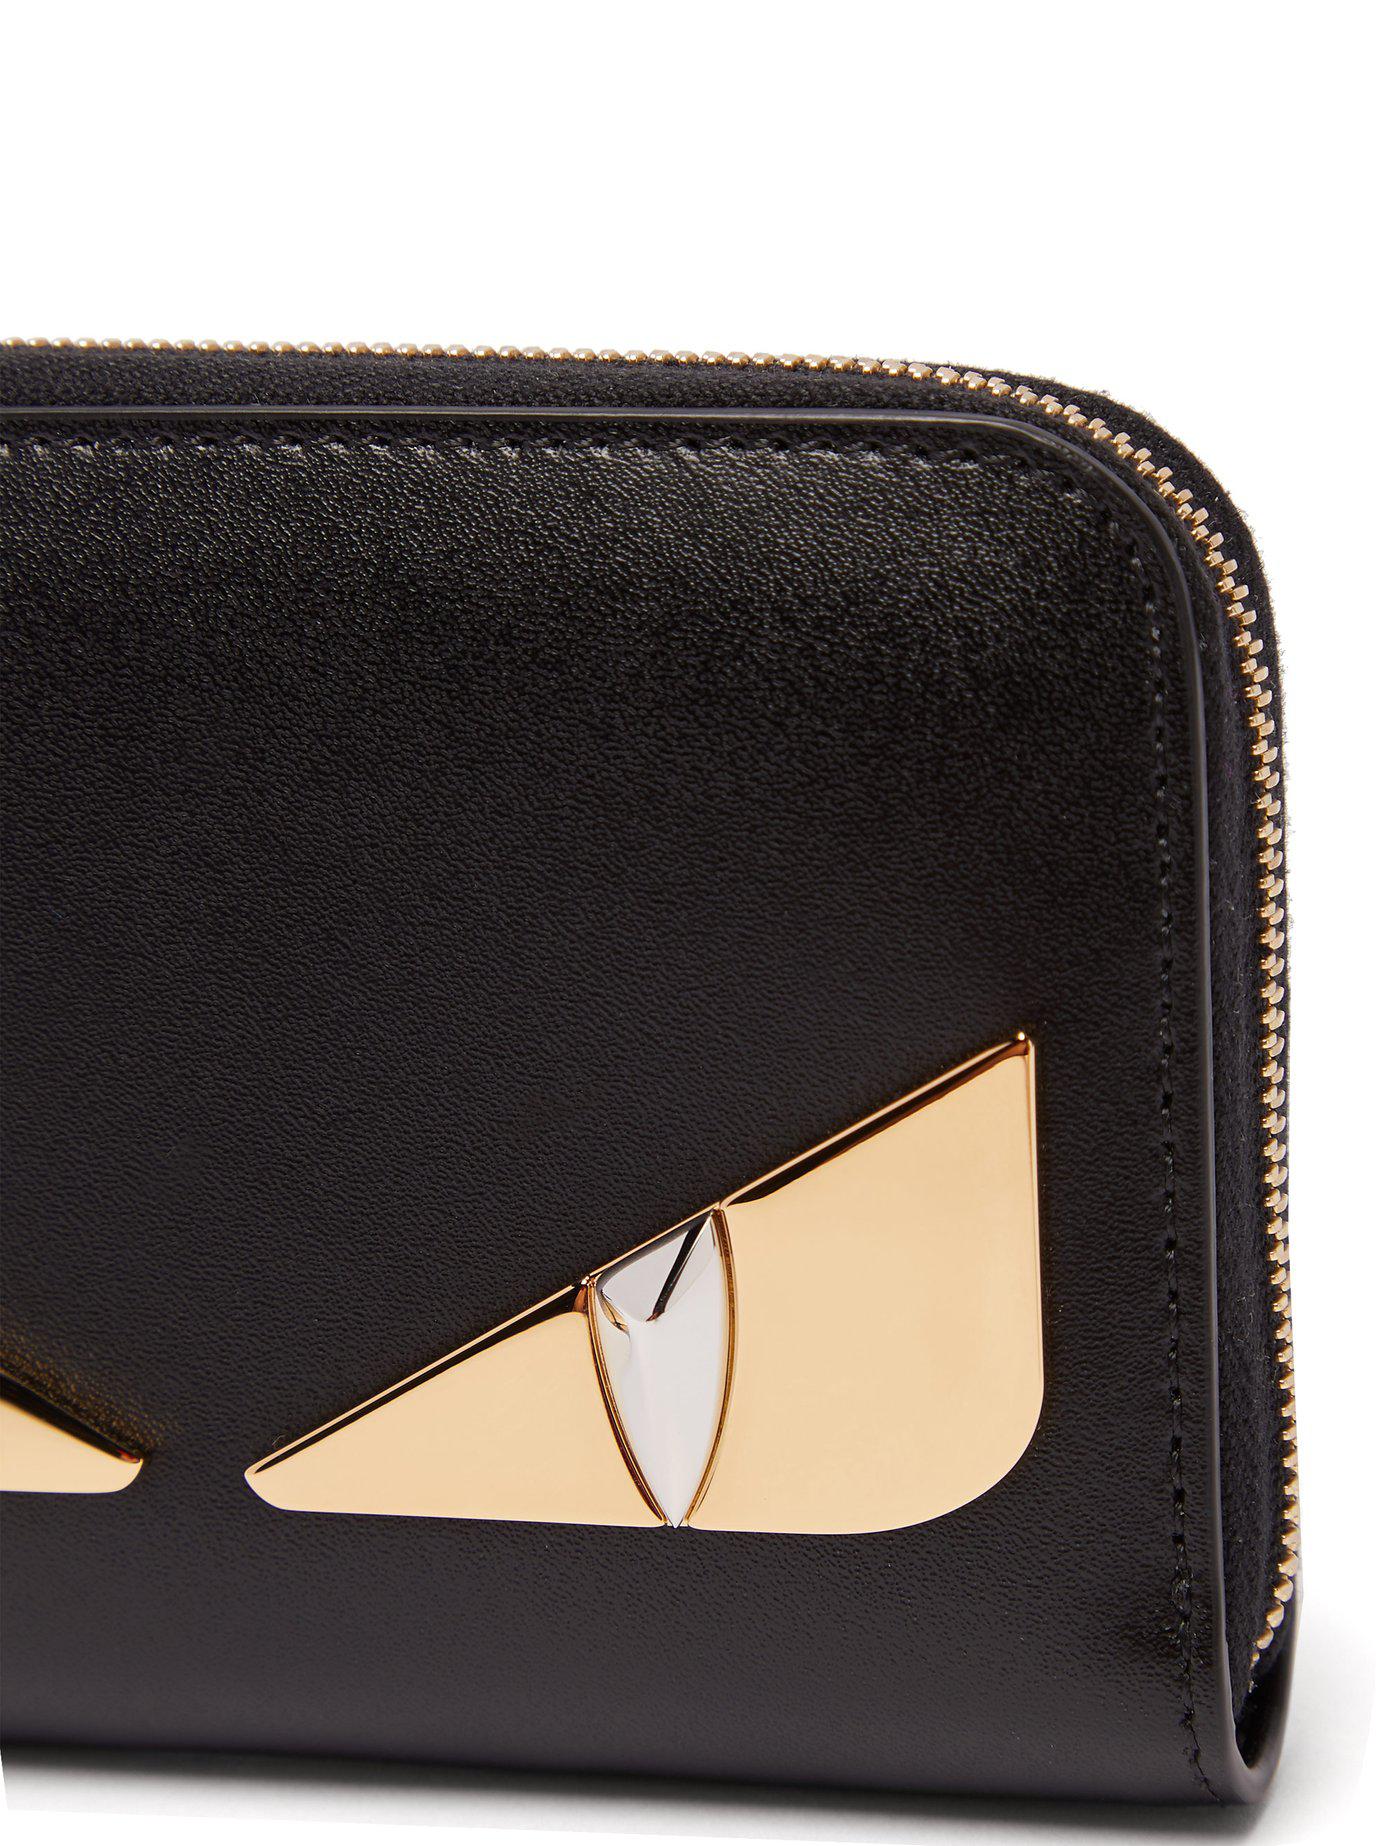 FENDI Bugs Monster Wallet Purse Black Gold Leather Long Zip Around 7M0210  #4637D